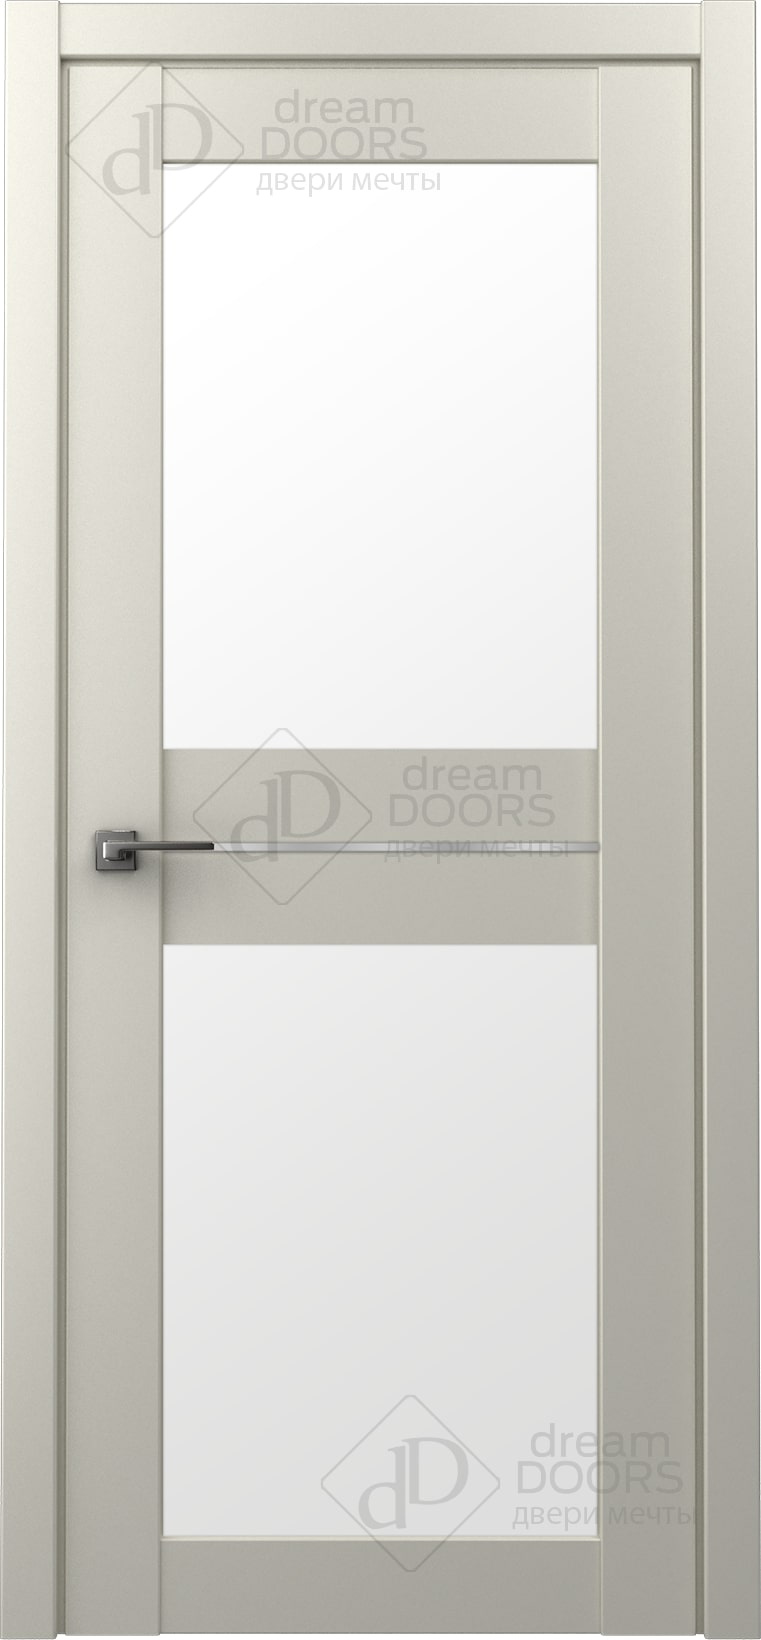 Dream Doors Межкомнатная дверь Престиж 2, арт. 16431 - фото №8